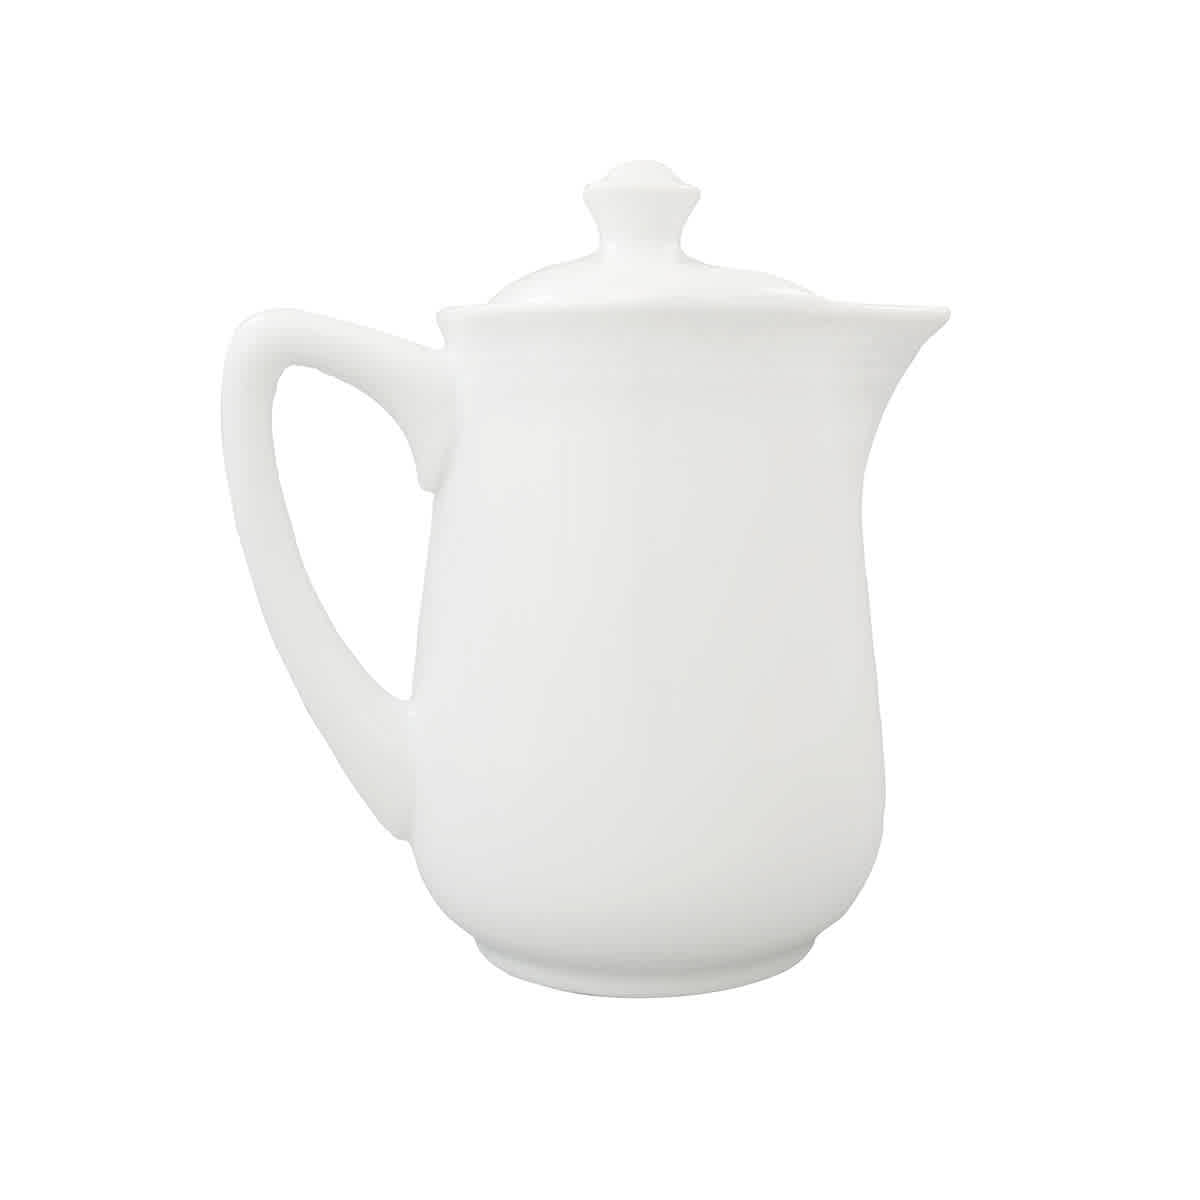 Ginori 1735 Coffeepot With Cover In White